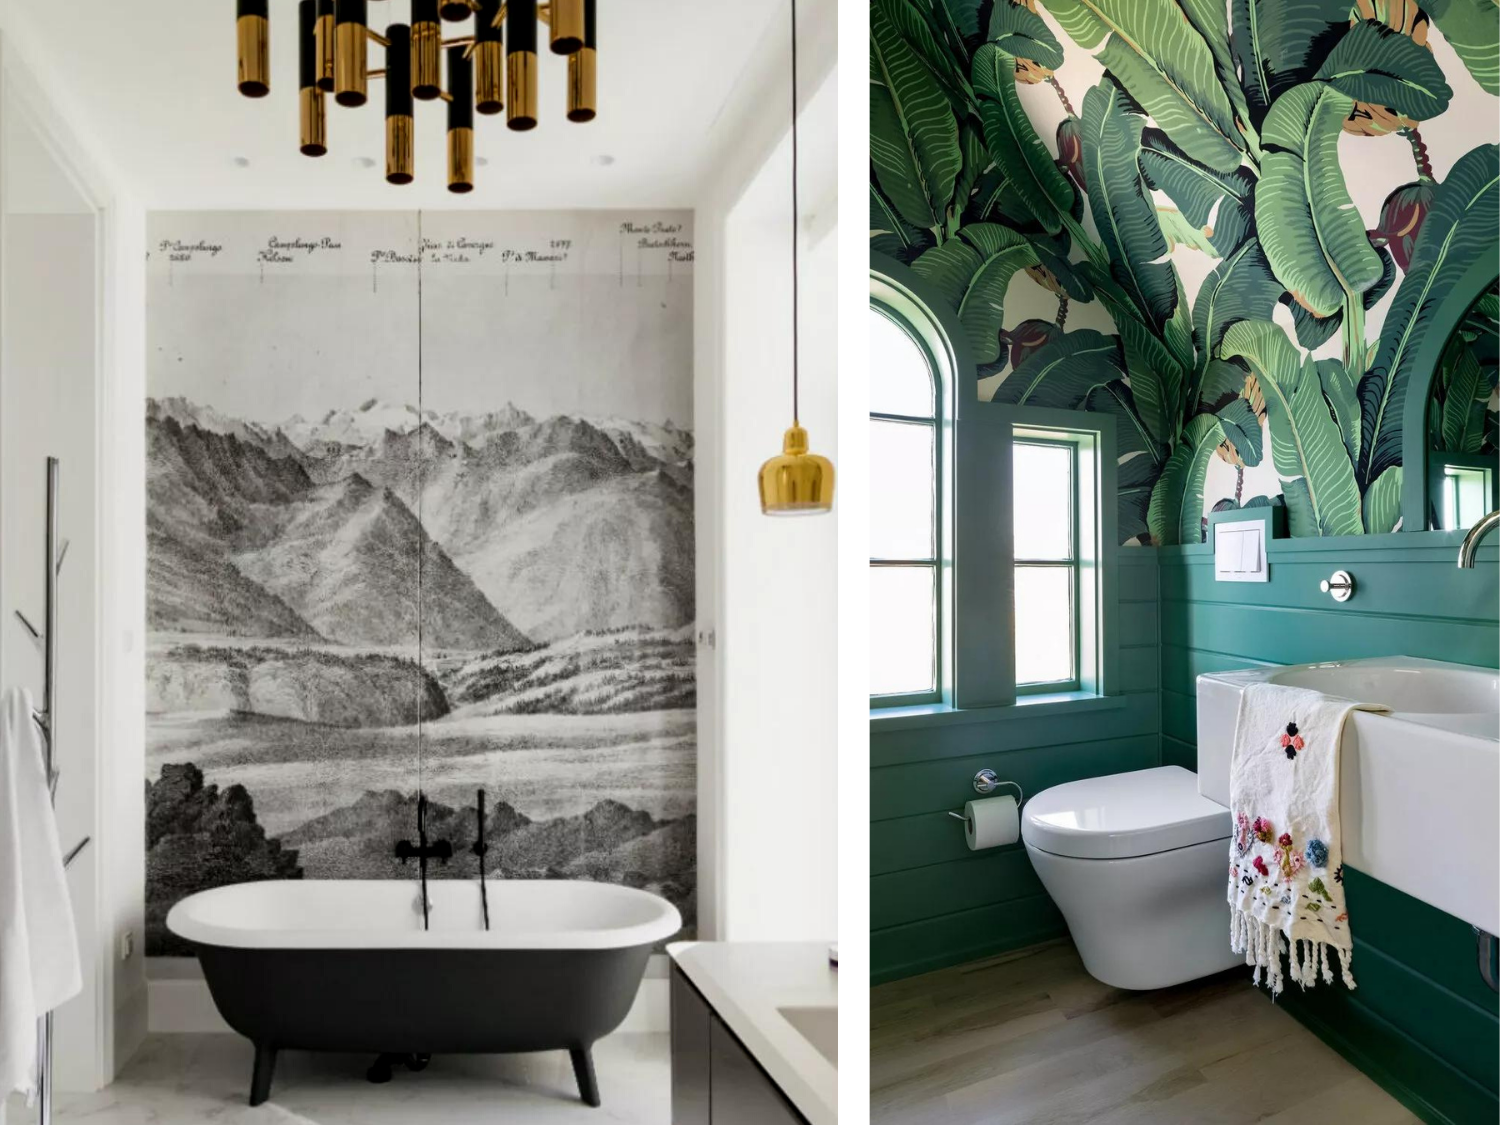 Interior design wallpaper examples in two luxury bathrooms